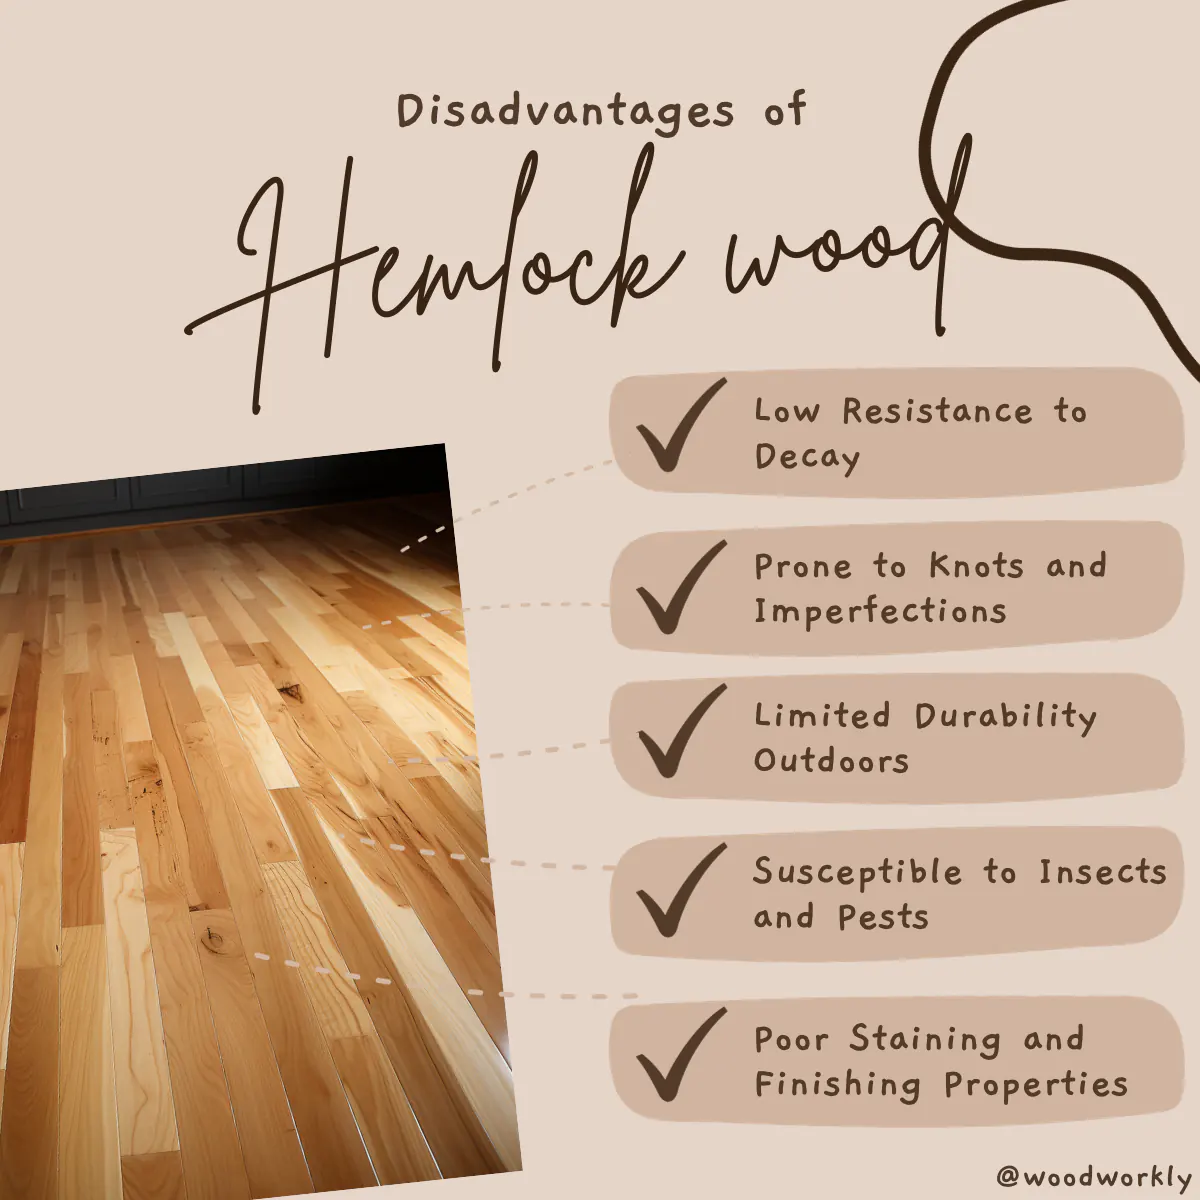 Disadvantages of Hemlock Wood